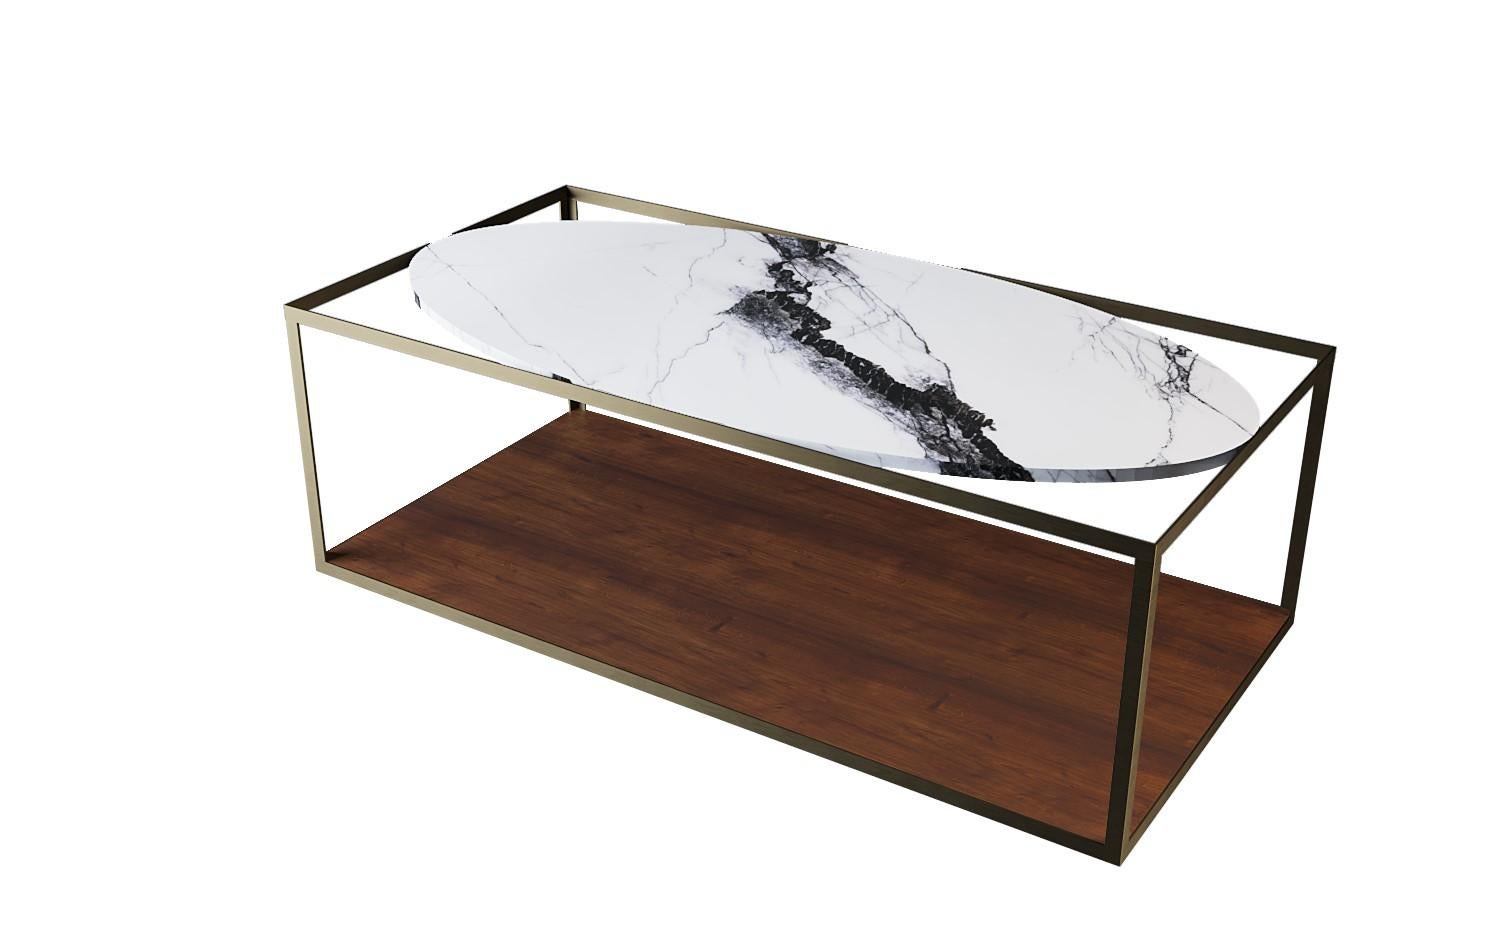 Chinese NORDST GAARD Coffee Table, Italian Grey Rain Marble, Danish Modern Design, New For Sale